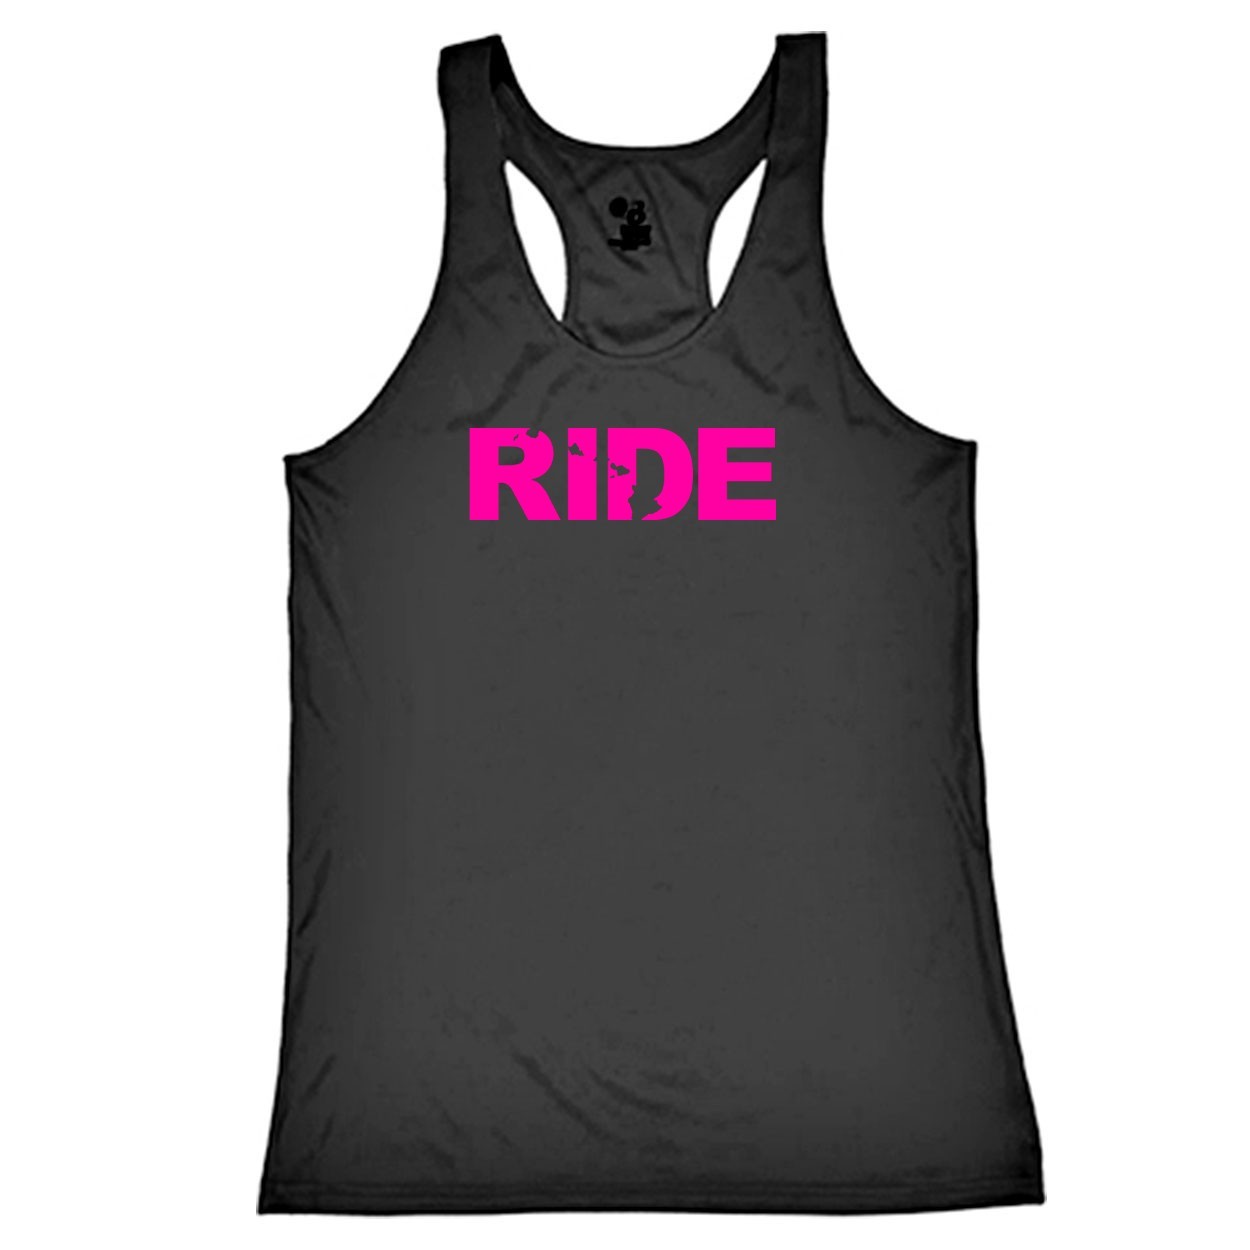 Ride Hawaii Classic Youth Girls Performance Racerback Tank Top Black (Pink Logo)